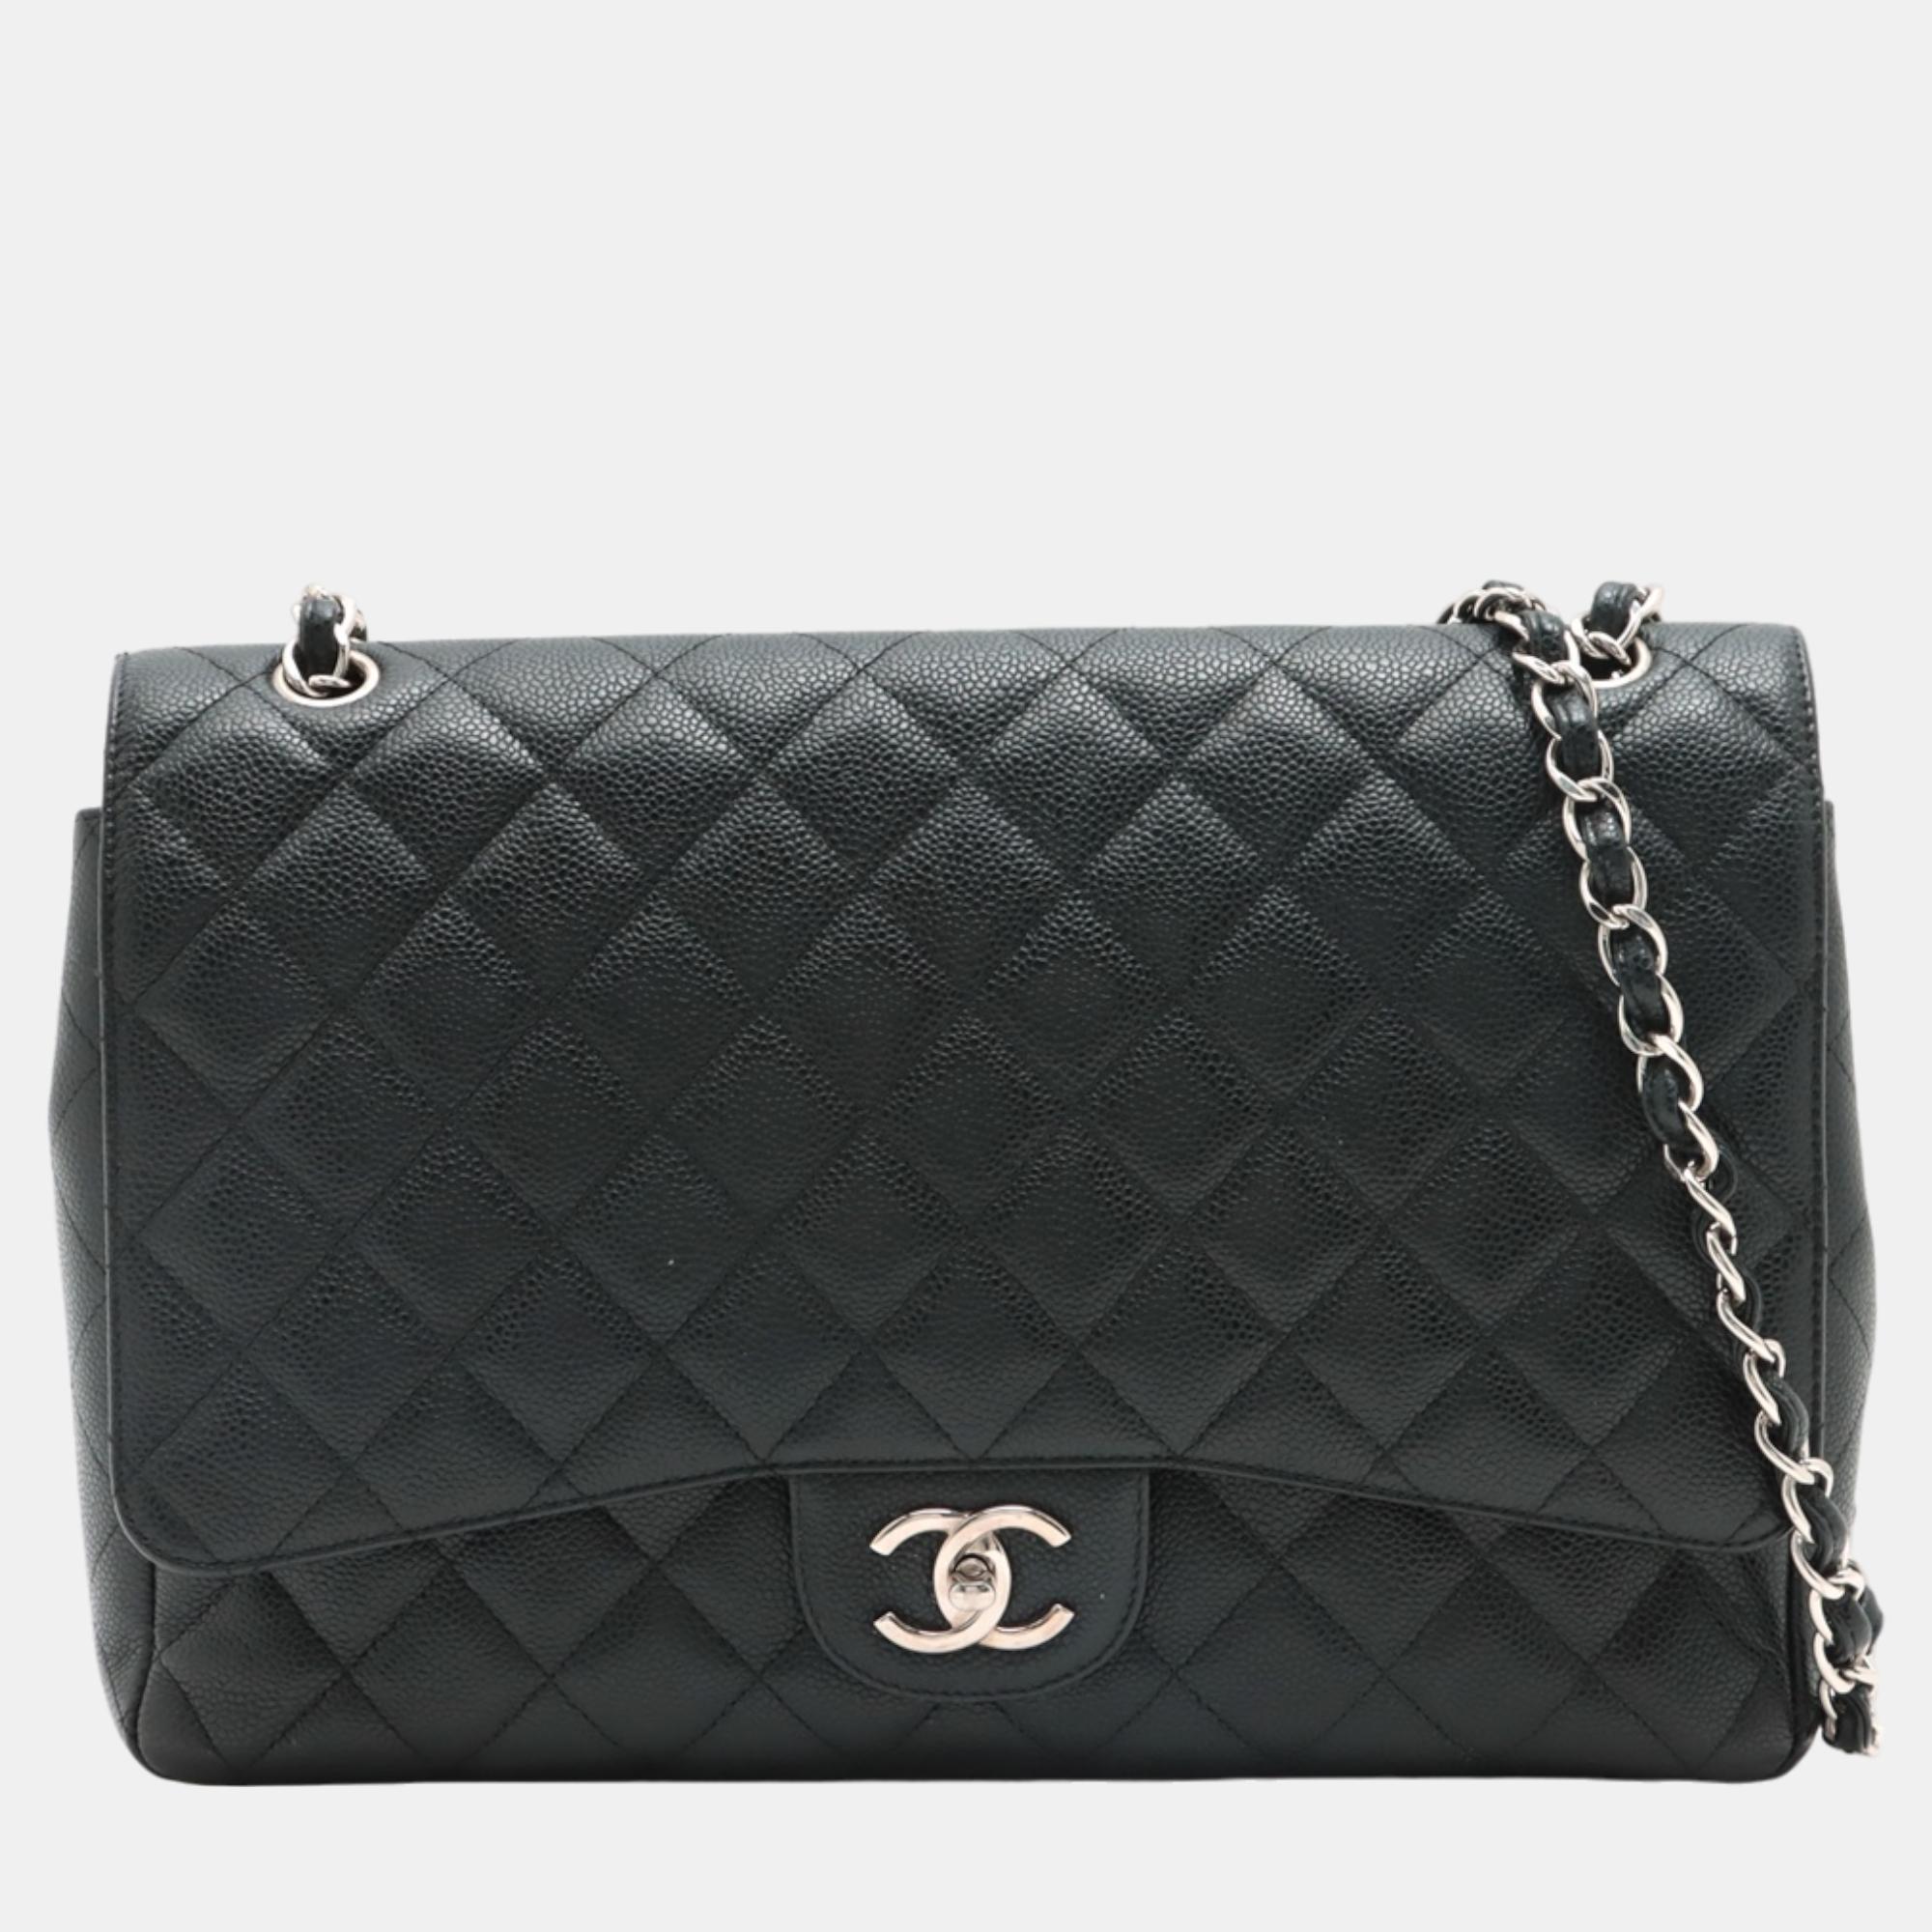 Chanel black caviar leather maxi classic double flap shoulder bag